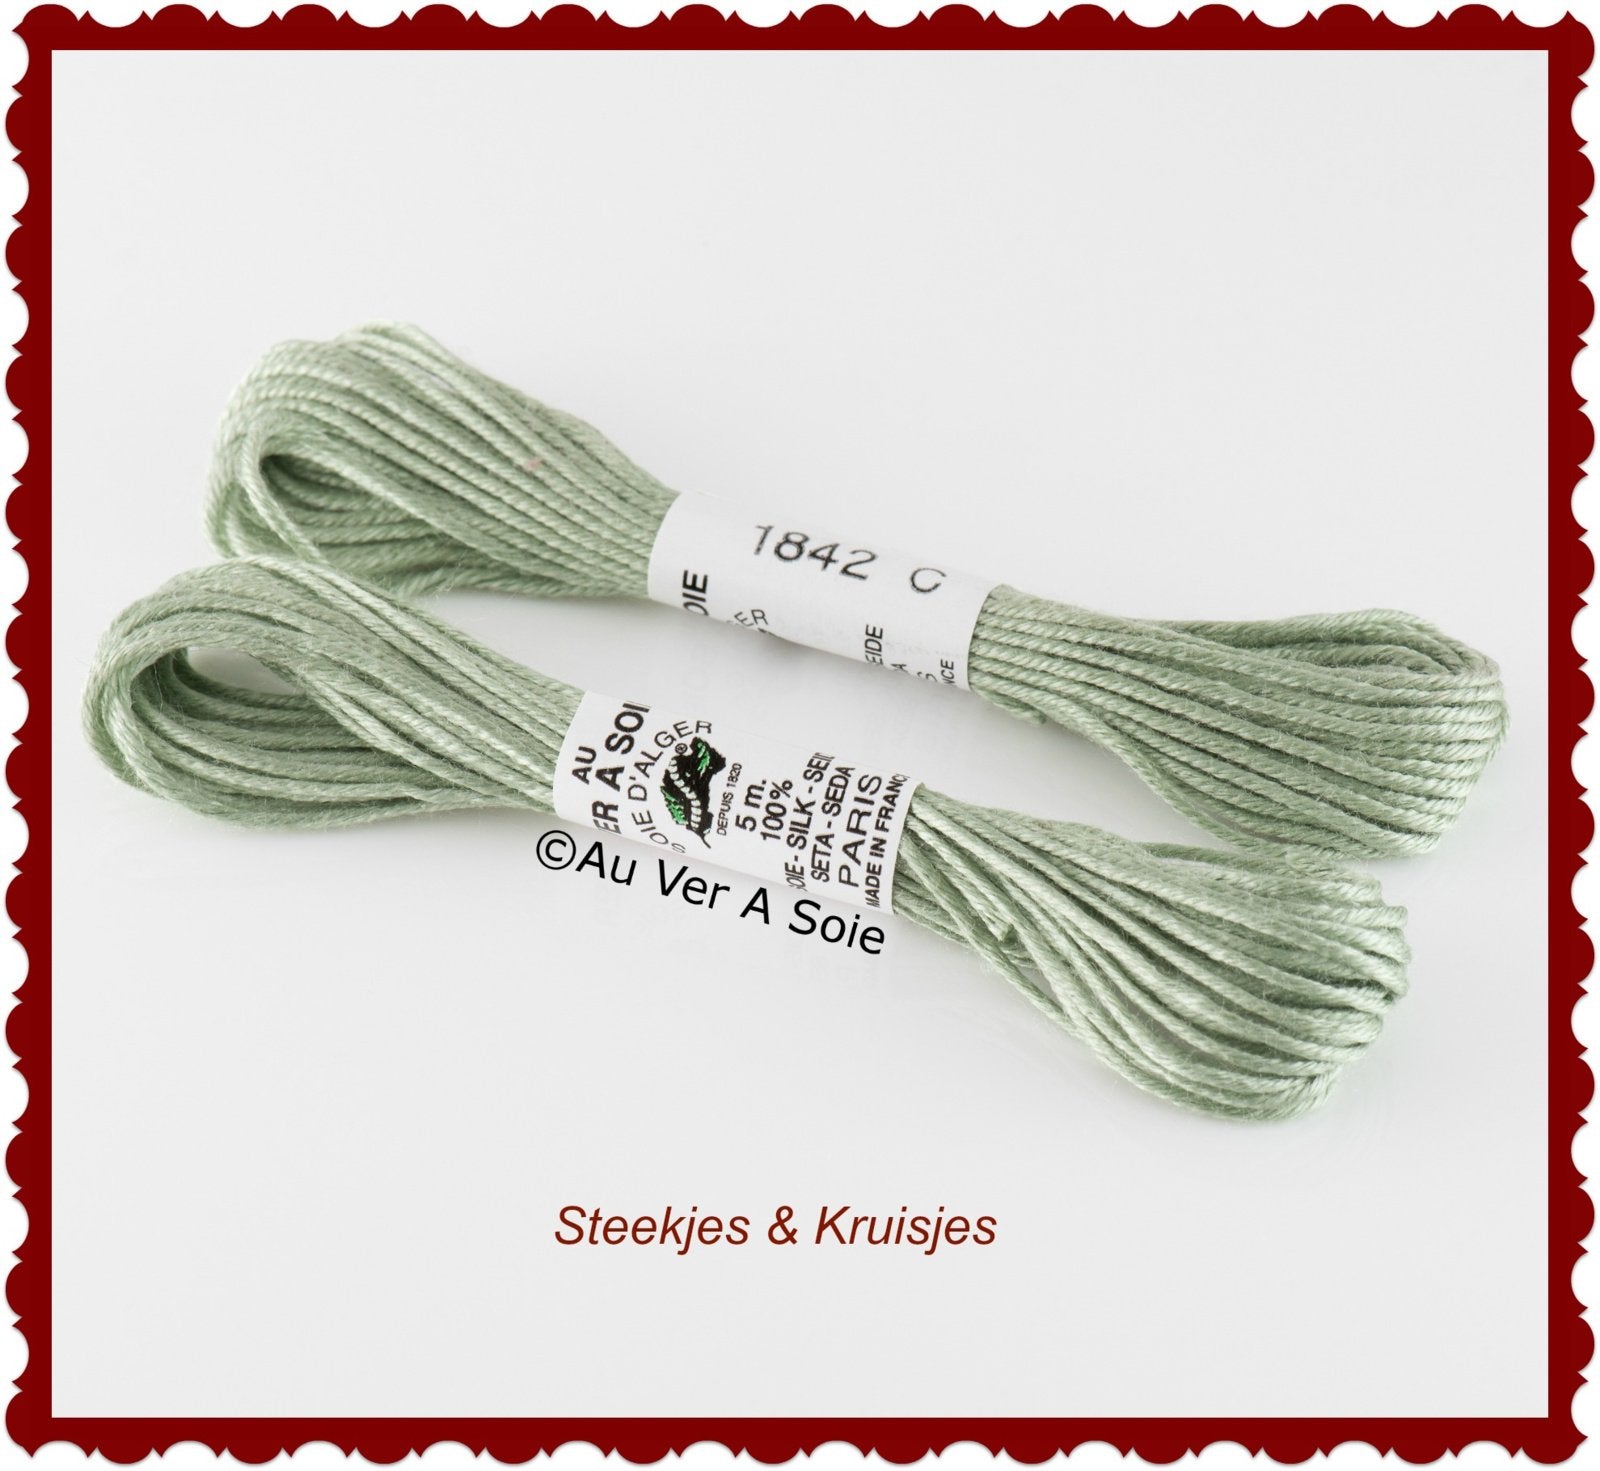 Au ver ie "soie d'alger" silk yarn color no. 1842